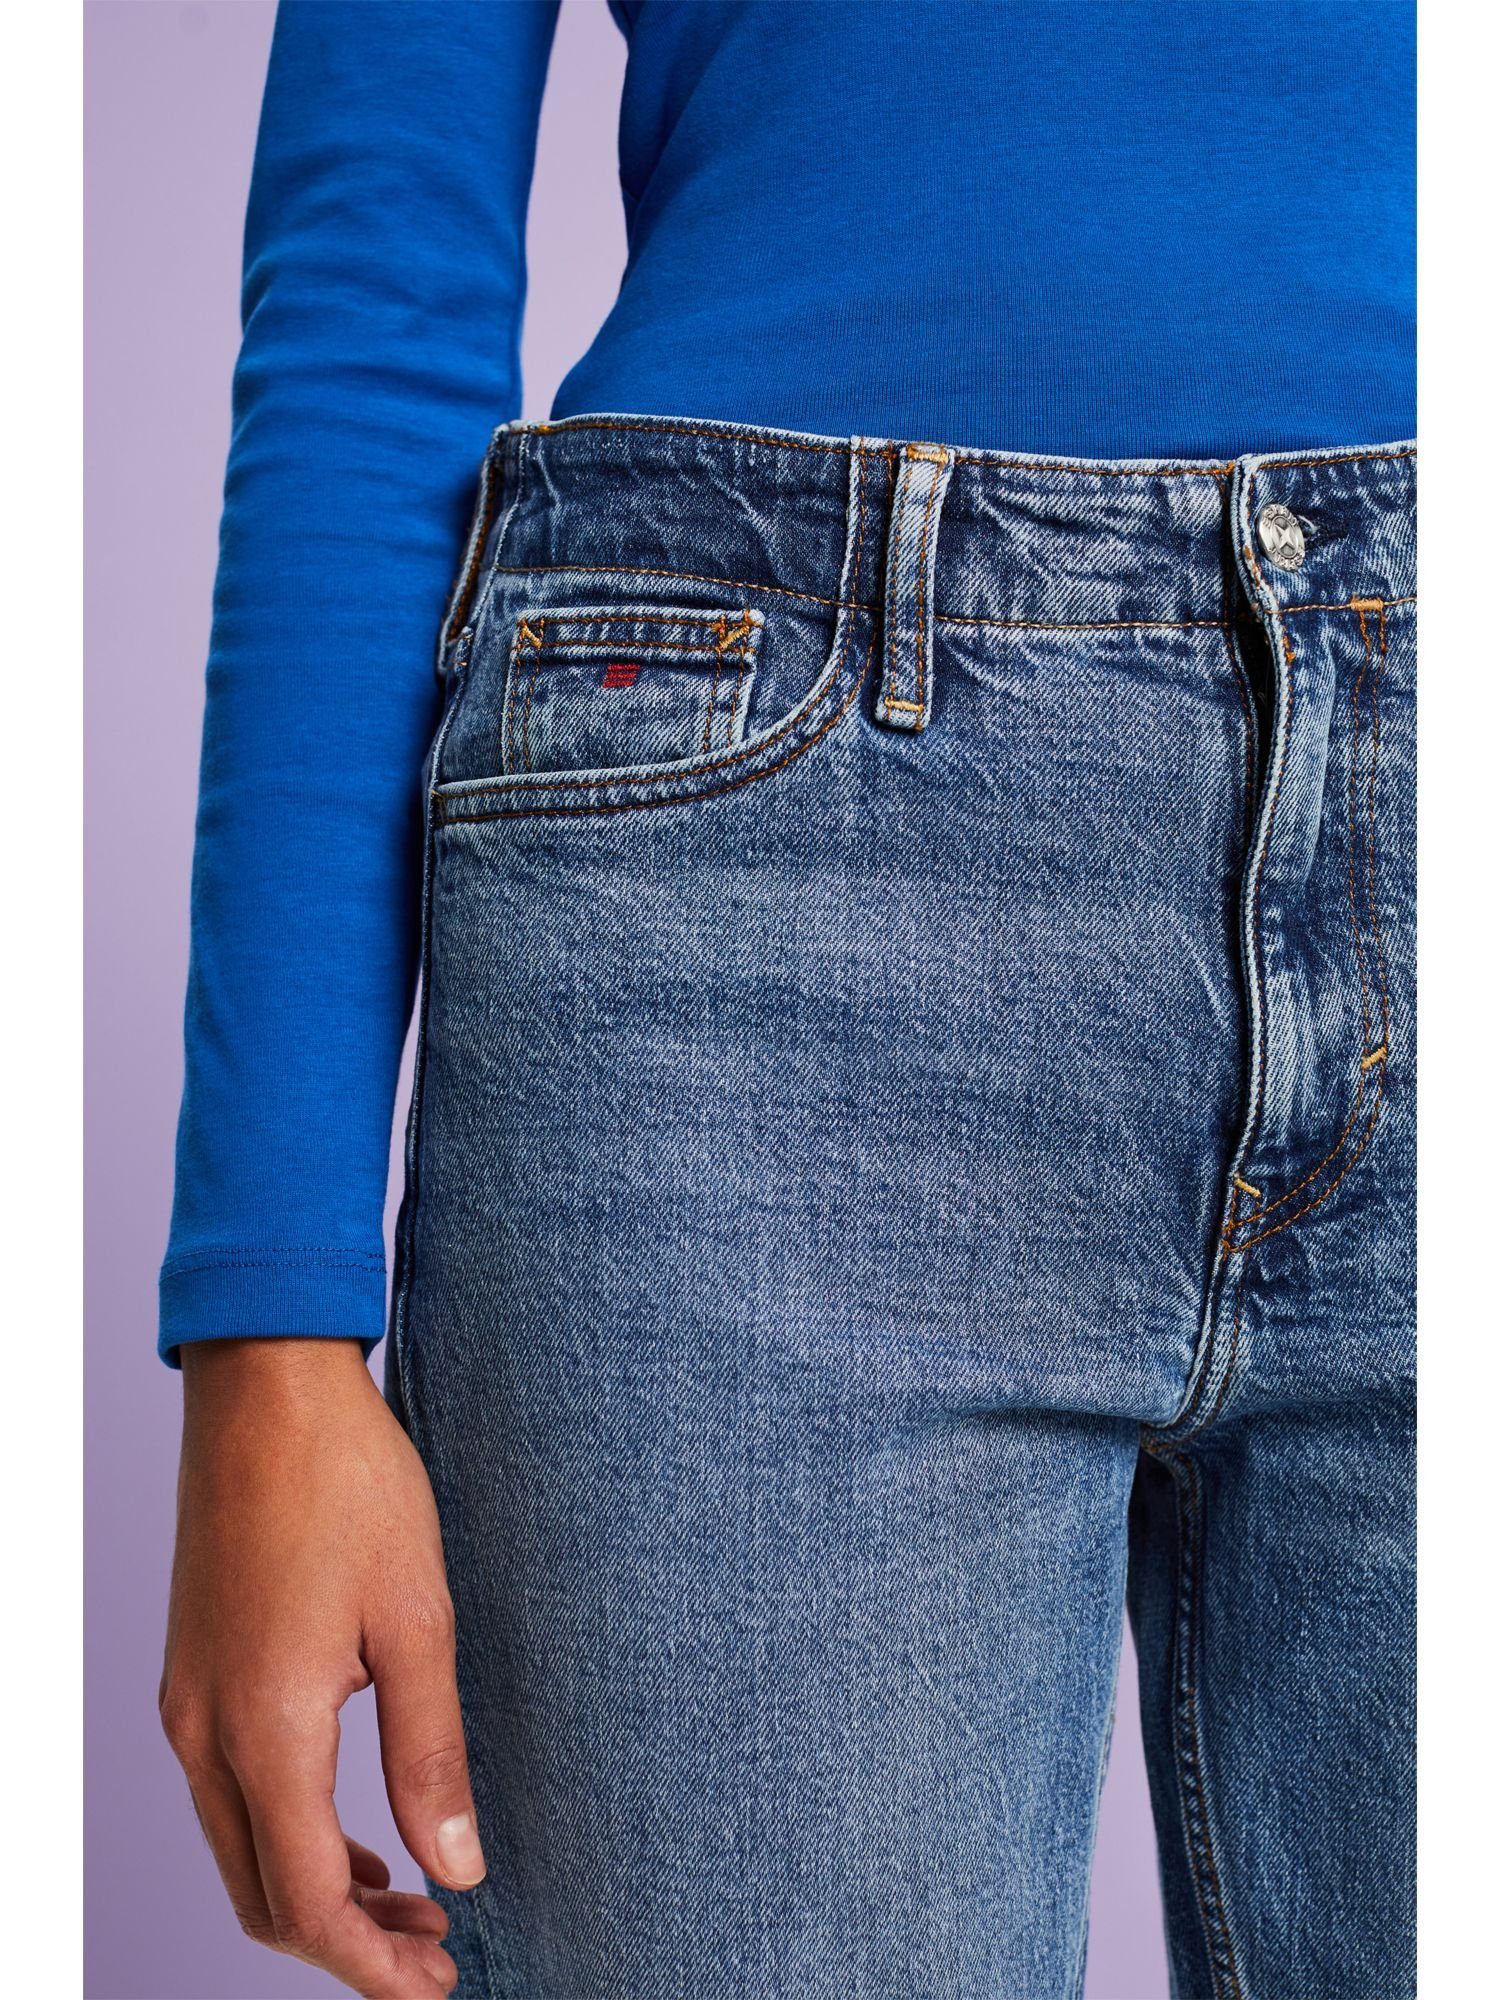 Relax-fit-Jeans Bundhöhe Retro-Classic-Jeans mit mittlerer Esprit